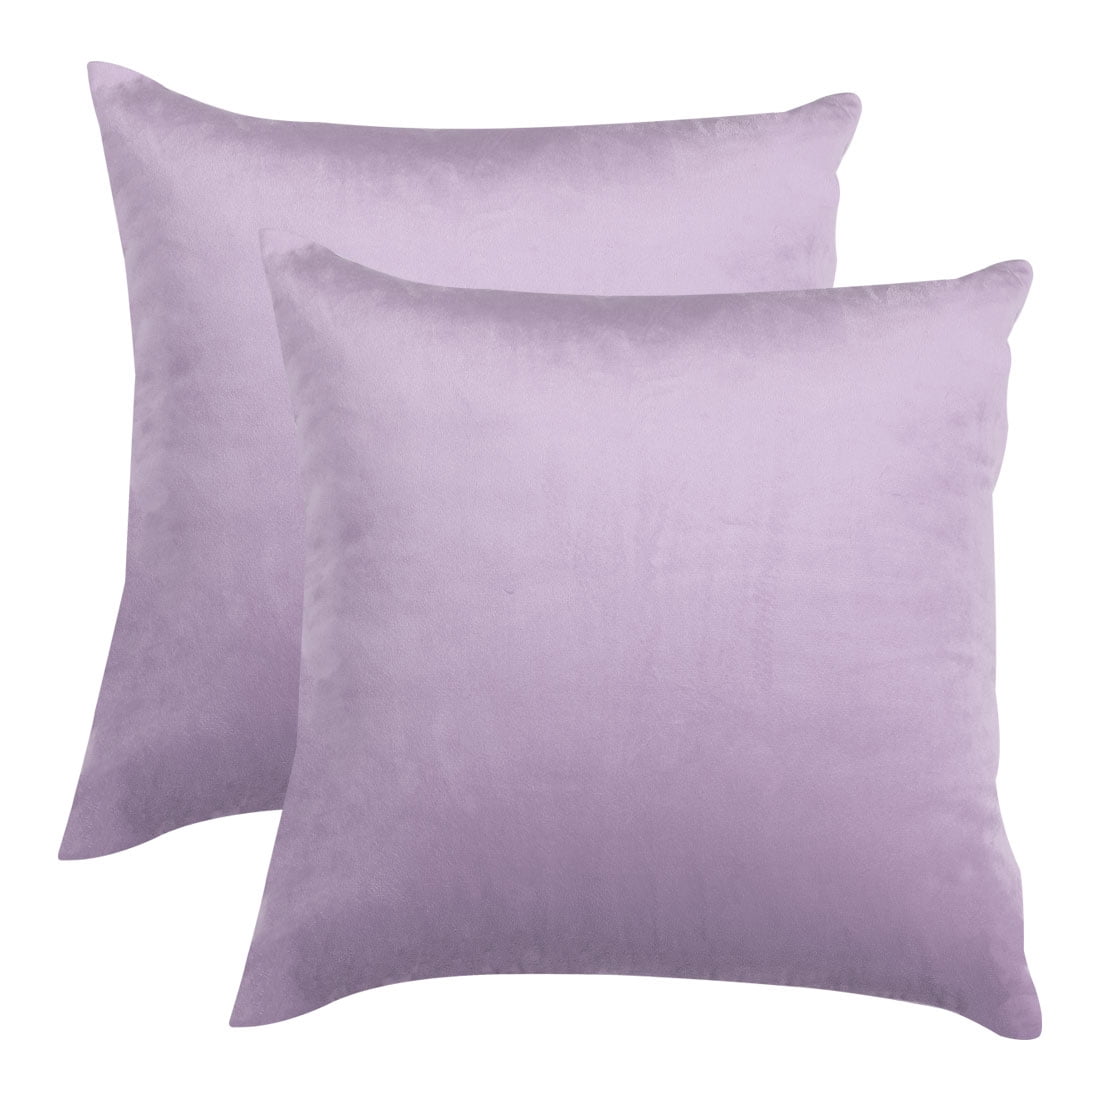 New Pink Plants Floral Velvet Pillow Case Letters Geometric Cushion Cover 2 size 